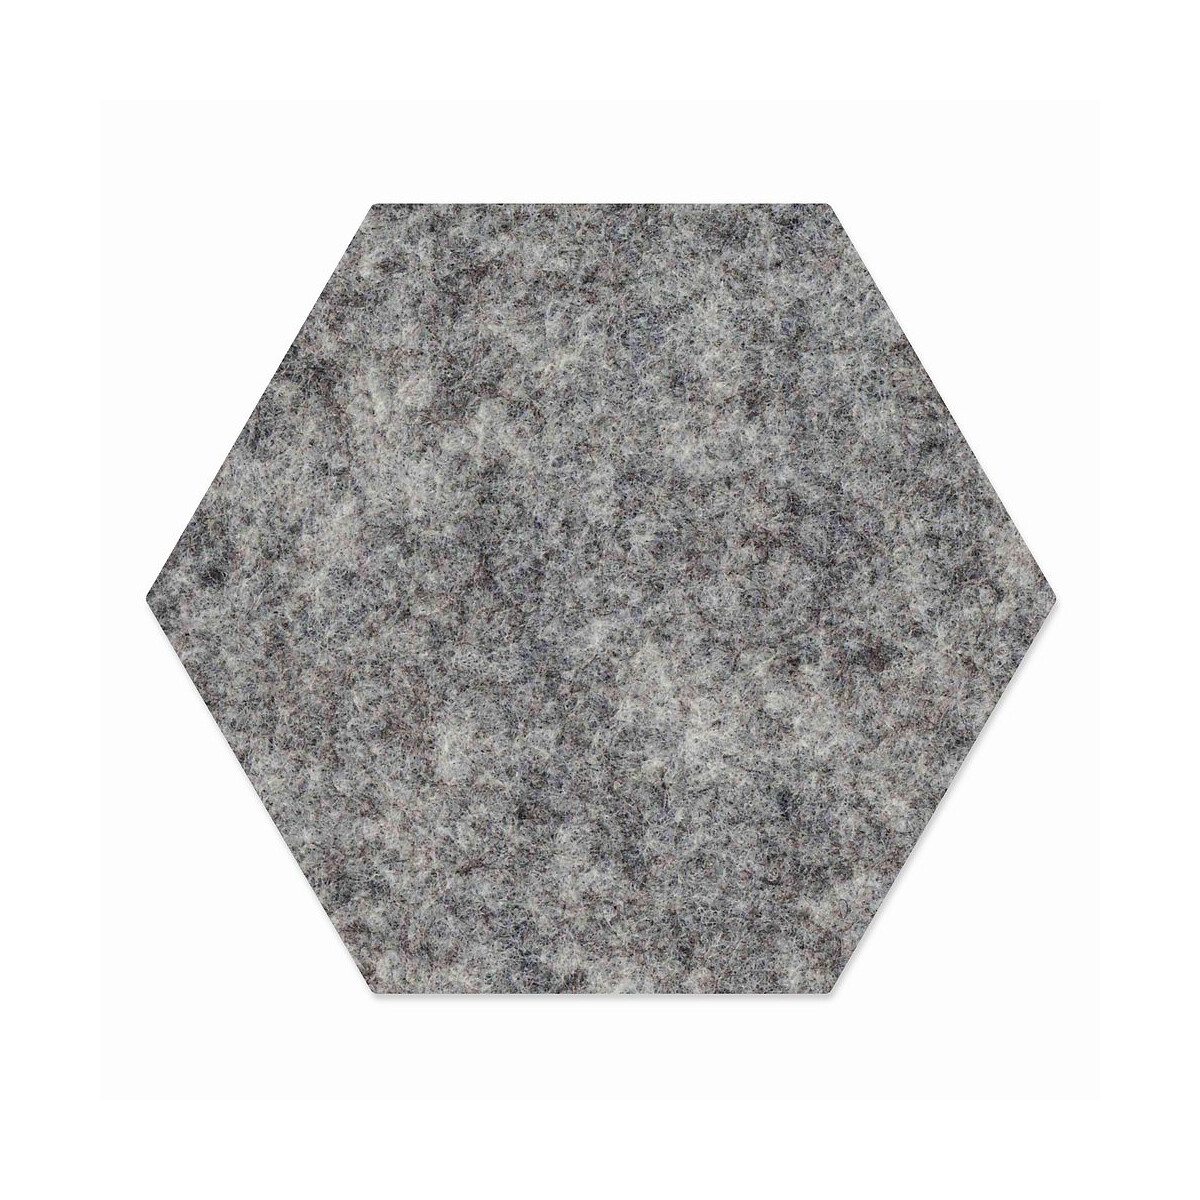 1 x FILZ Untersetzer Wabe, Hexagon 11 cm - hellgrau meliert